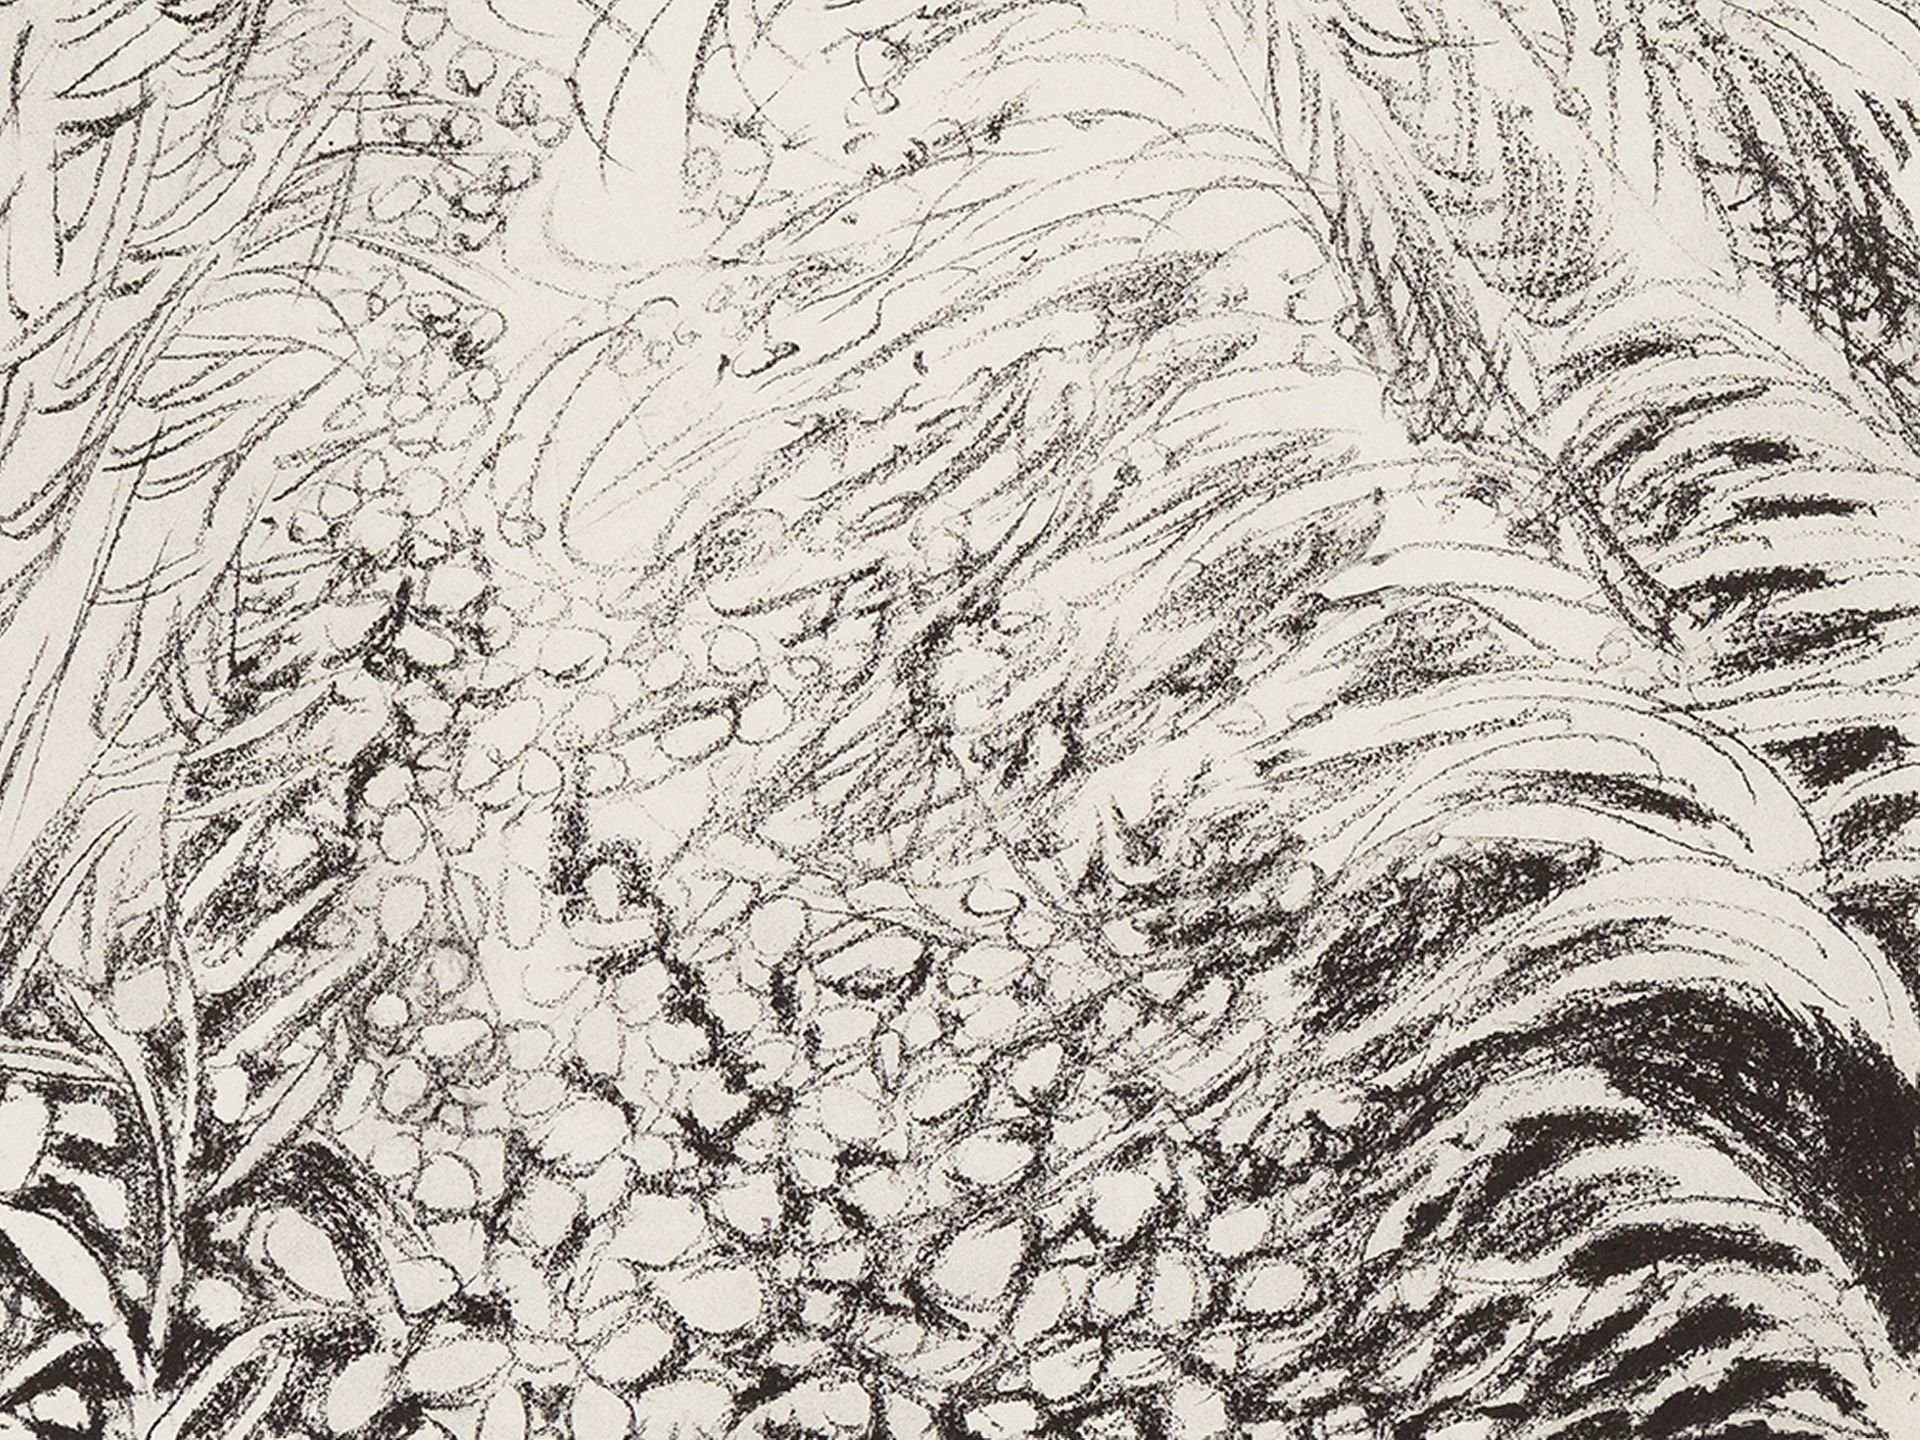 Fazzini, Pericle 1913 Grottemmare - 1987 Rom Feld Lithografie auf Papier 1970er Jahre Signiert. - Bild 3 aus 6